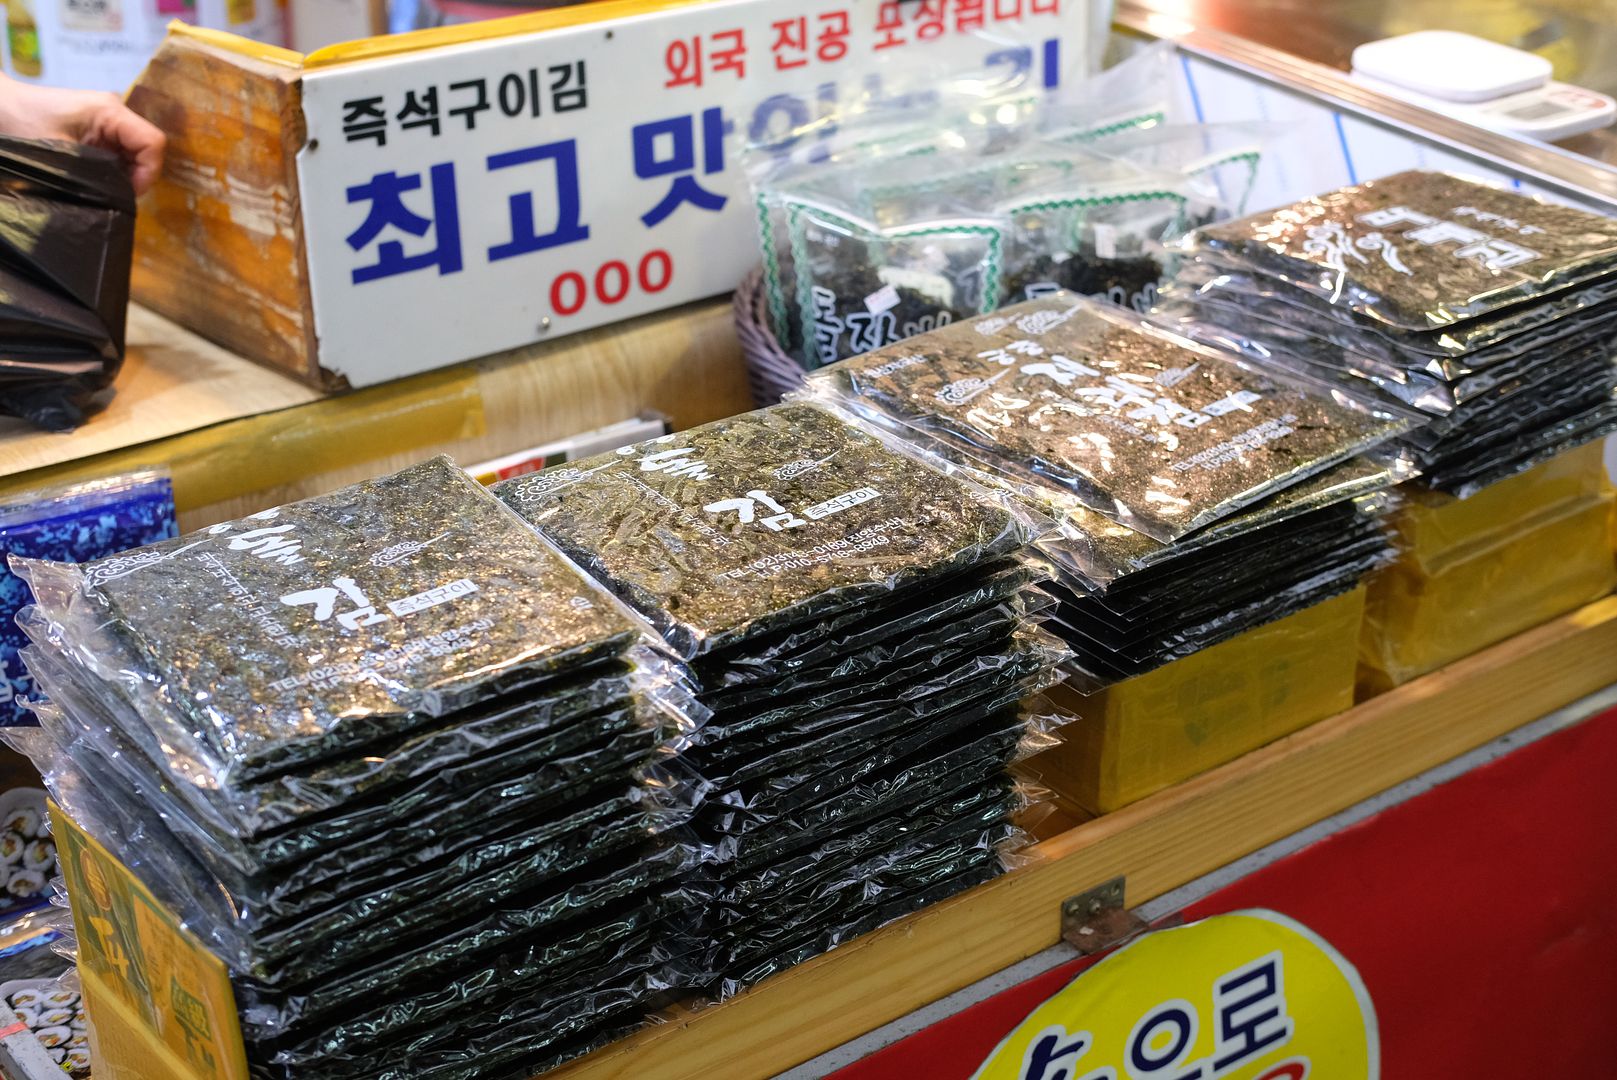 photo Mangwon Market Seoul 21.jpg